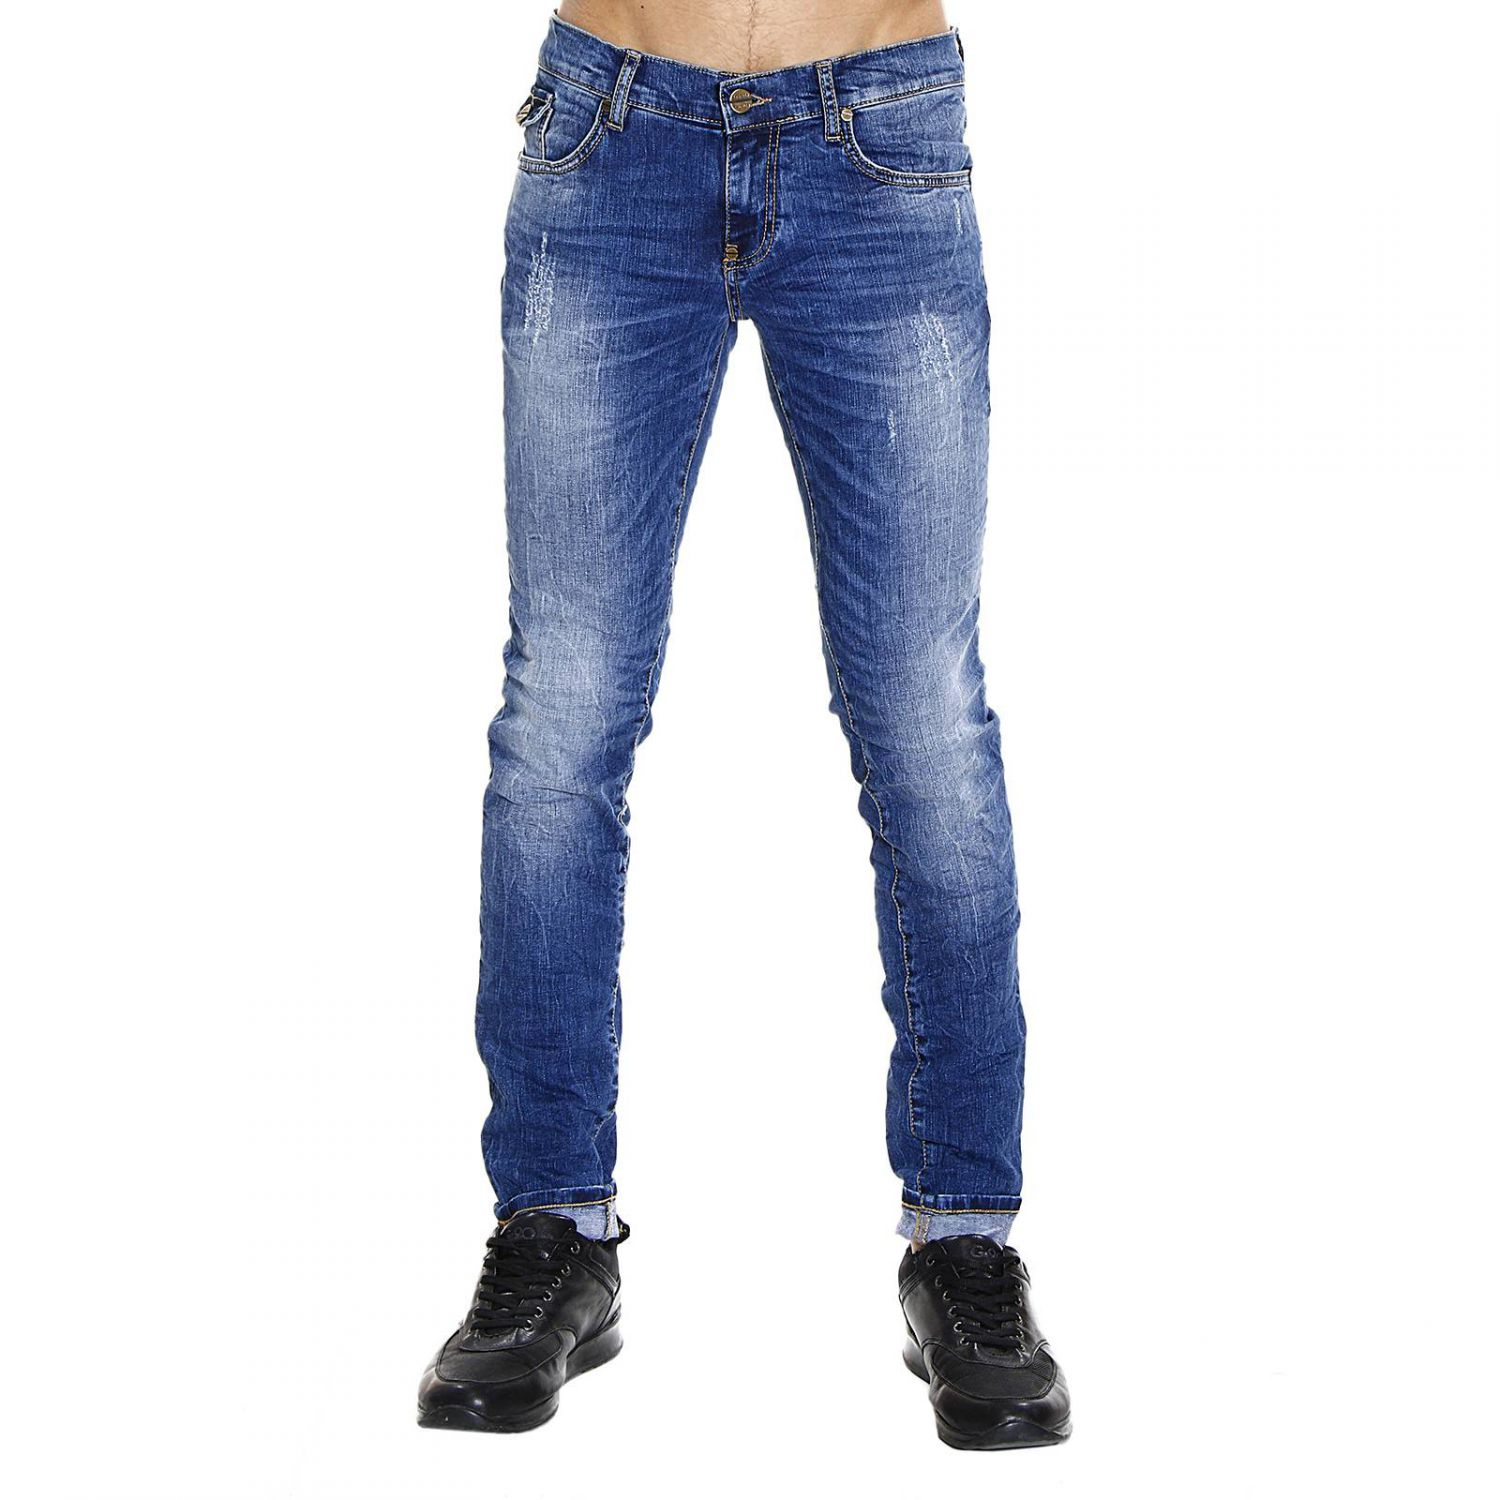 Lyst - Frankie Morello Microbroken Slim Stretch Used Denim Jeans in ...